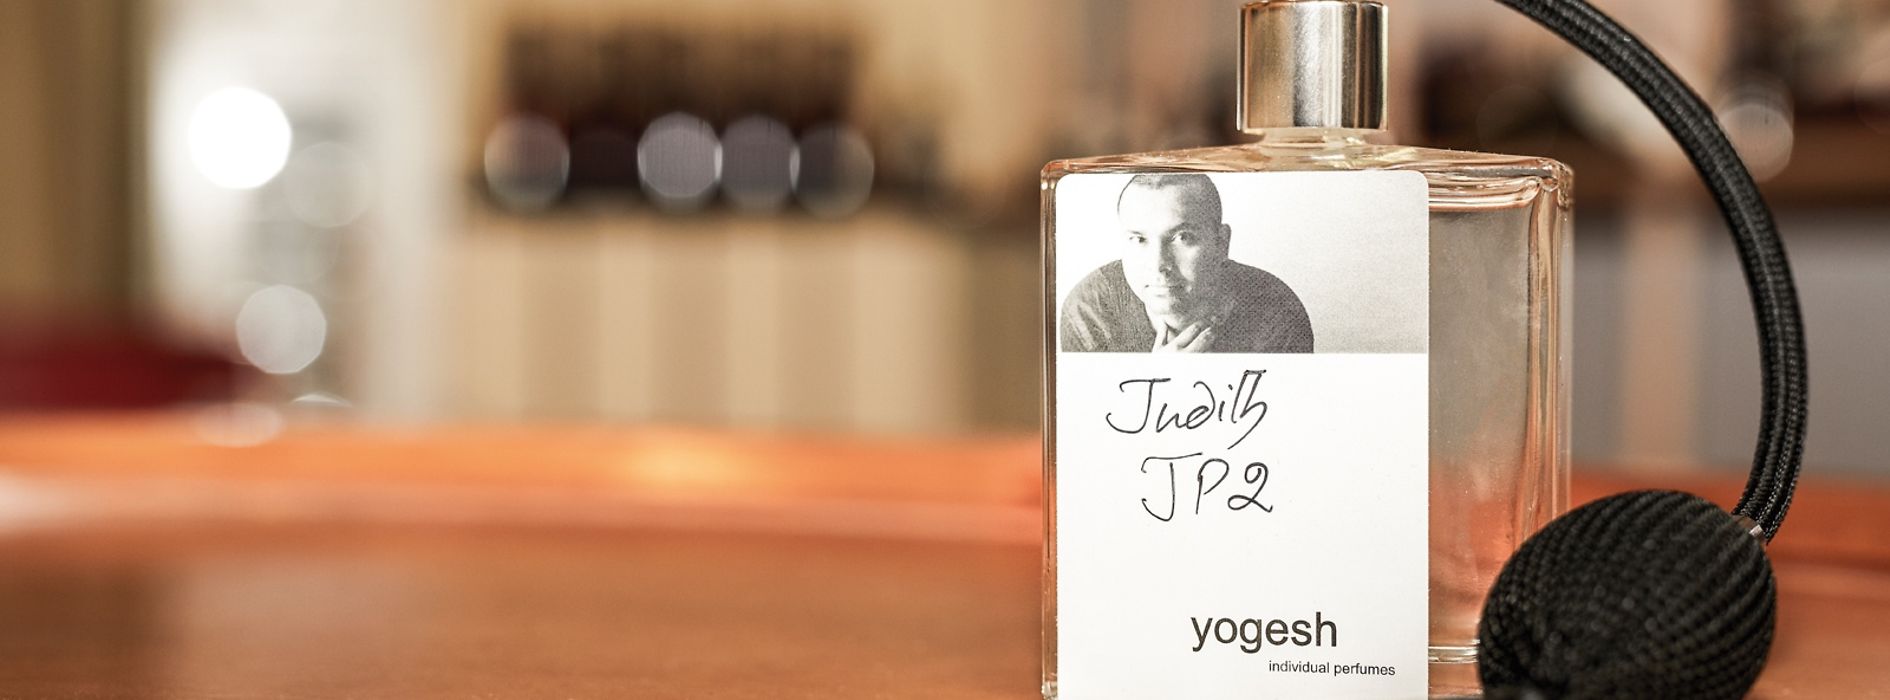 yogesh Parfums, flacone